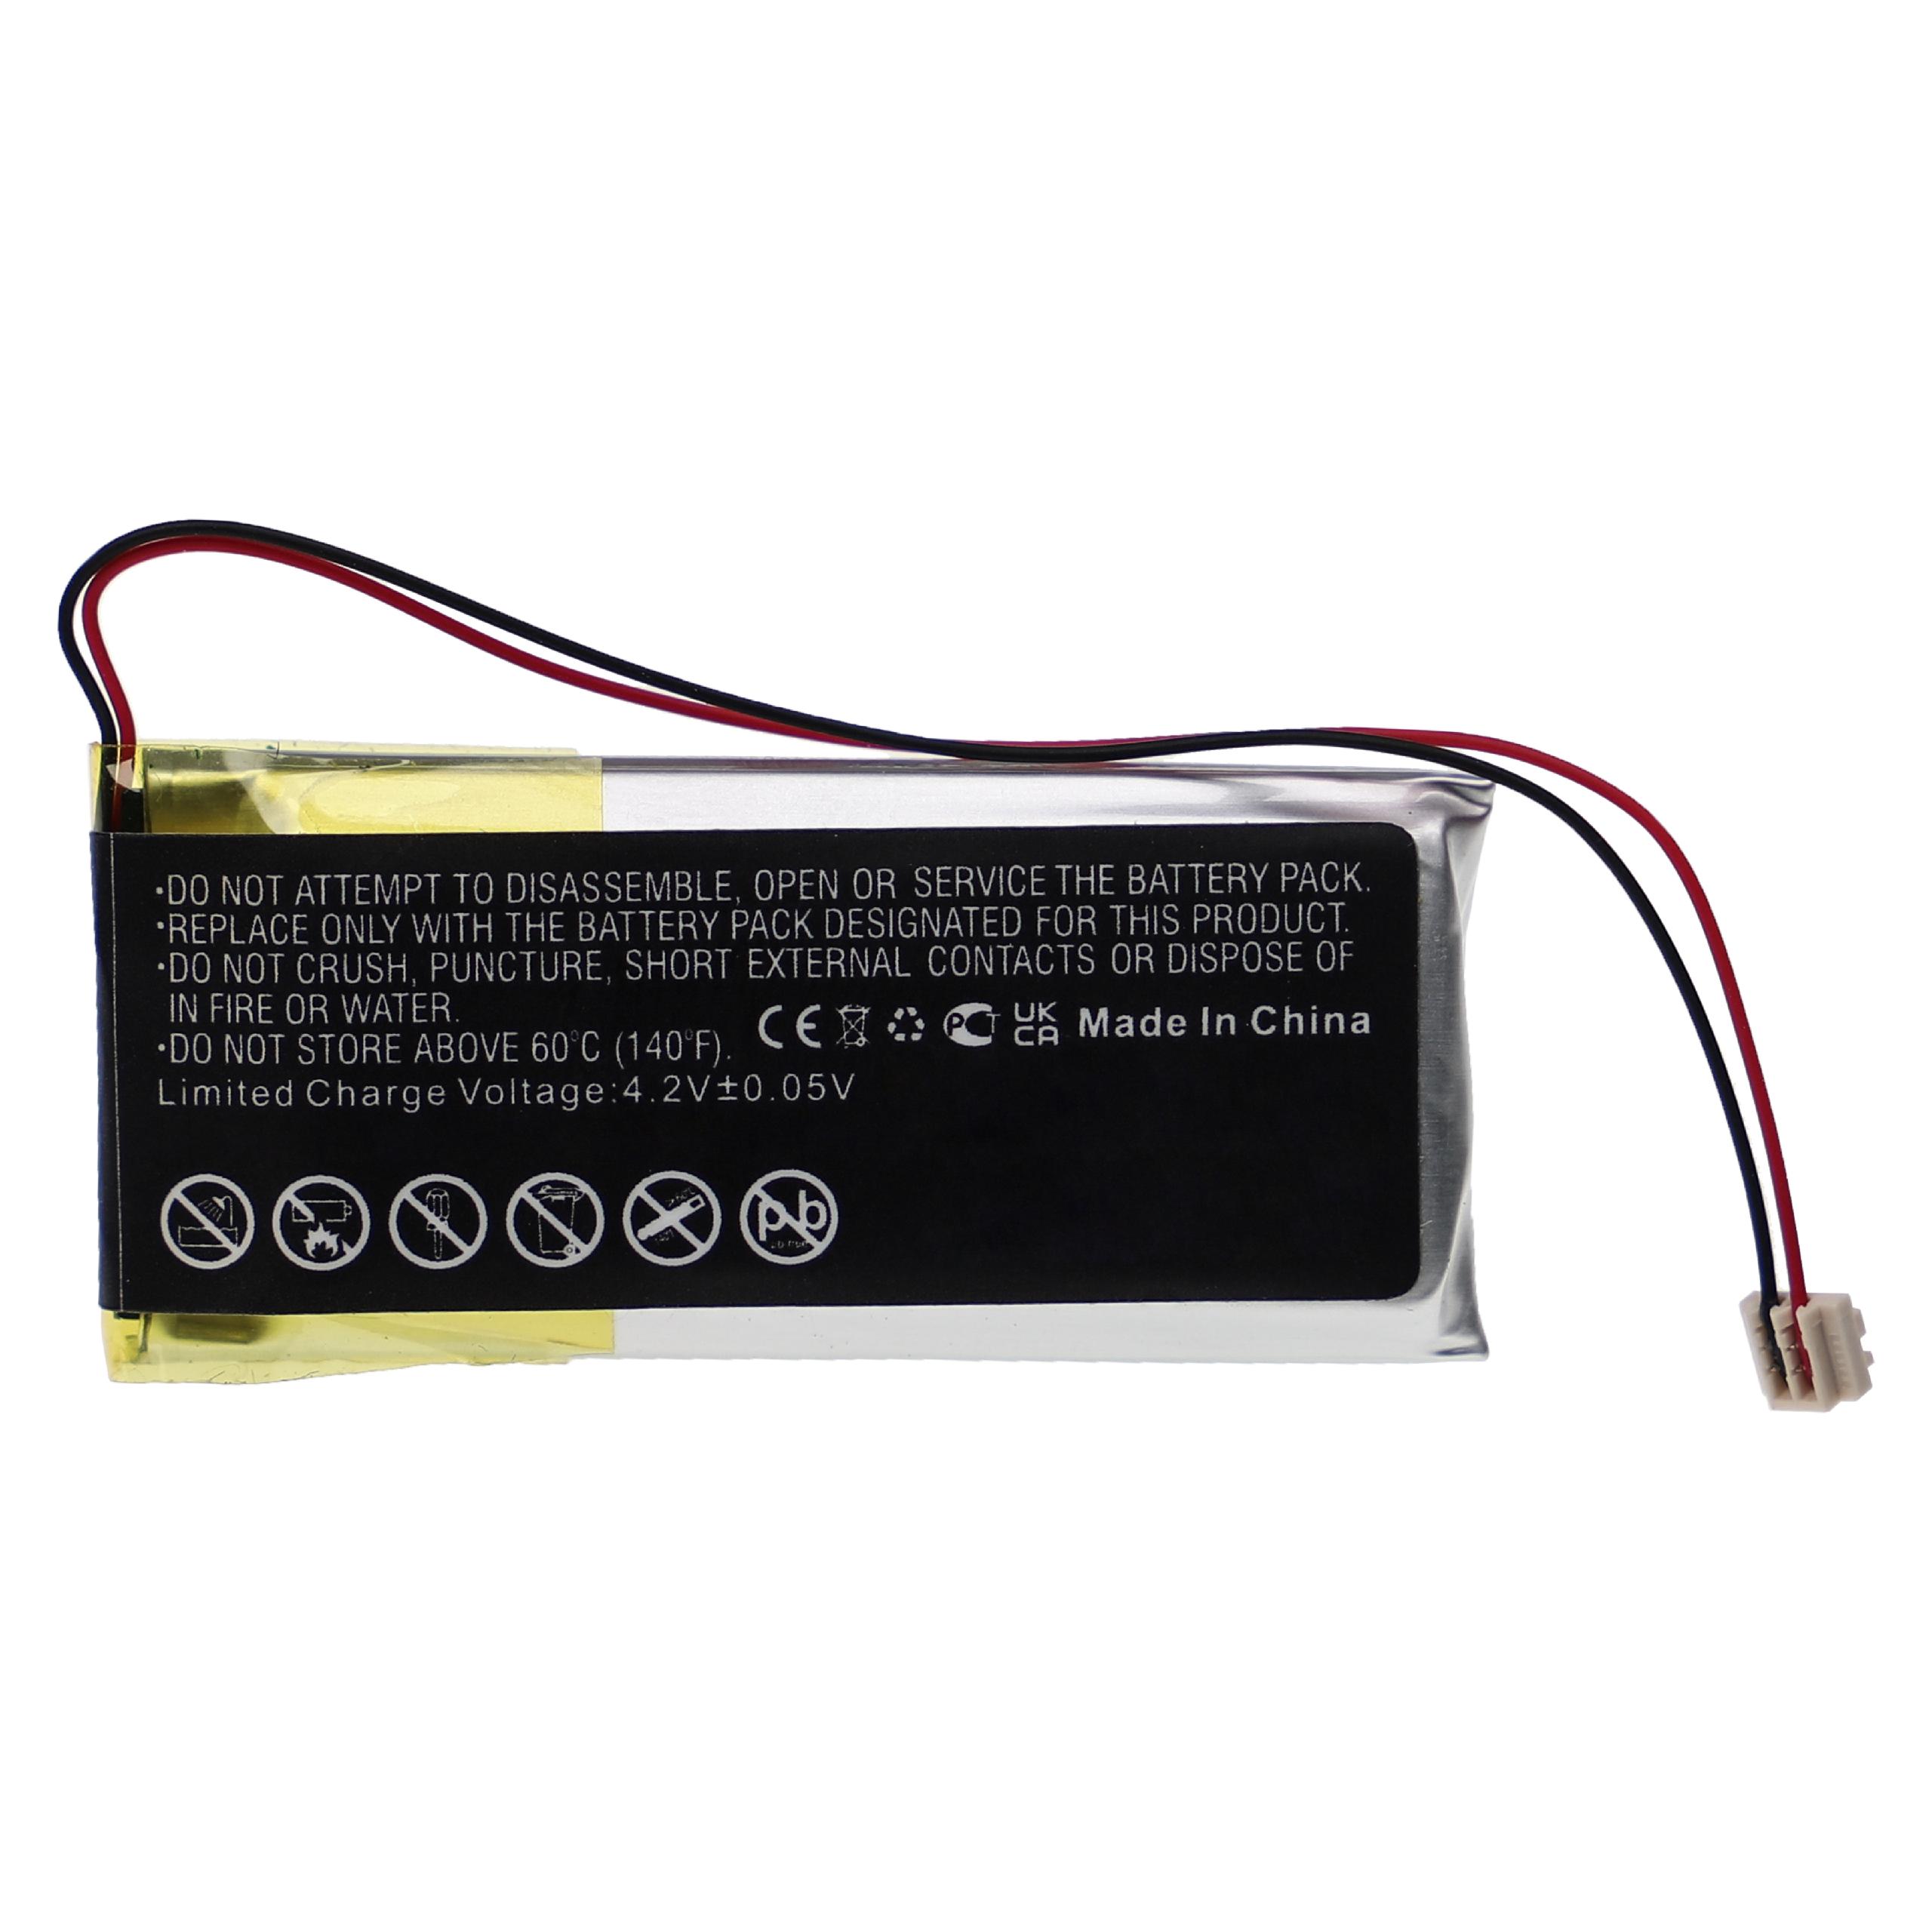 Akumulator do latarki warsztatowej zamiennik Streamlight 61128, PL702245 - 600 mAh 3,7 V LiPo